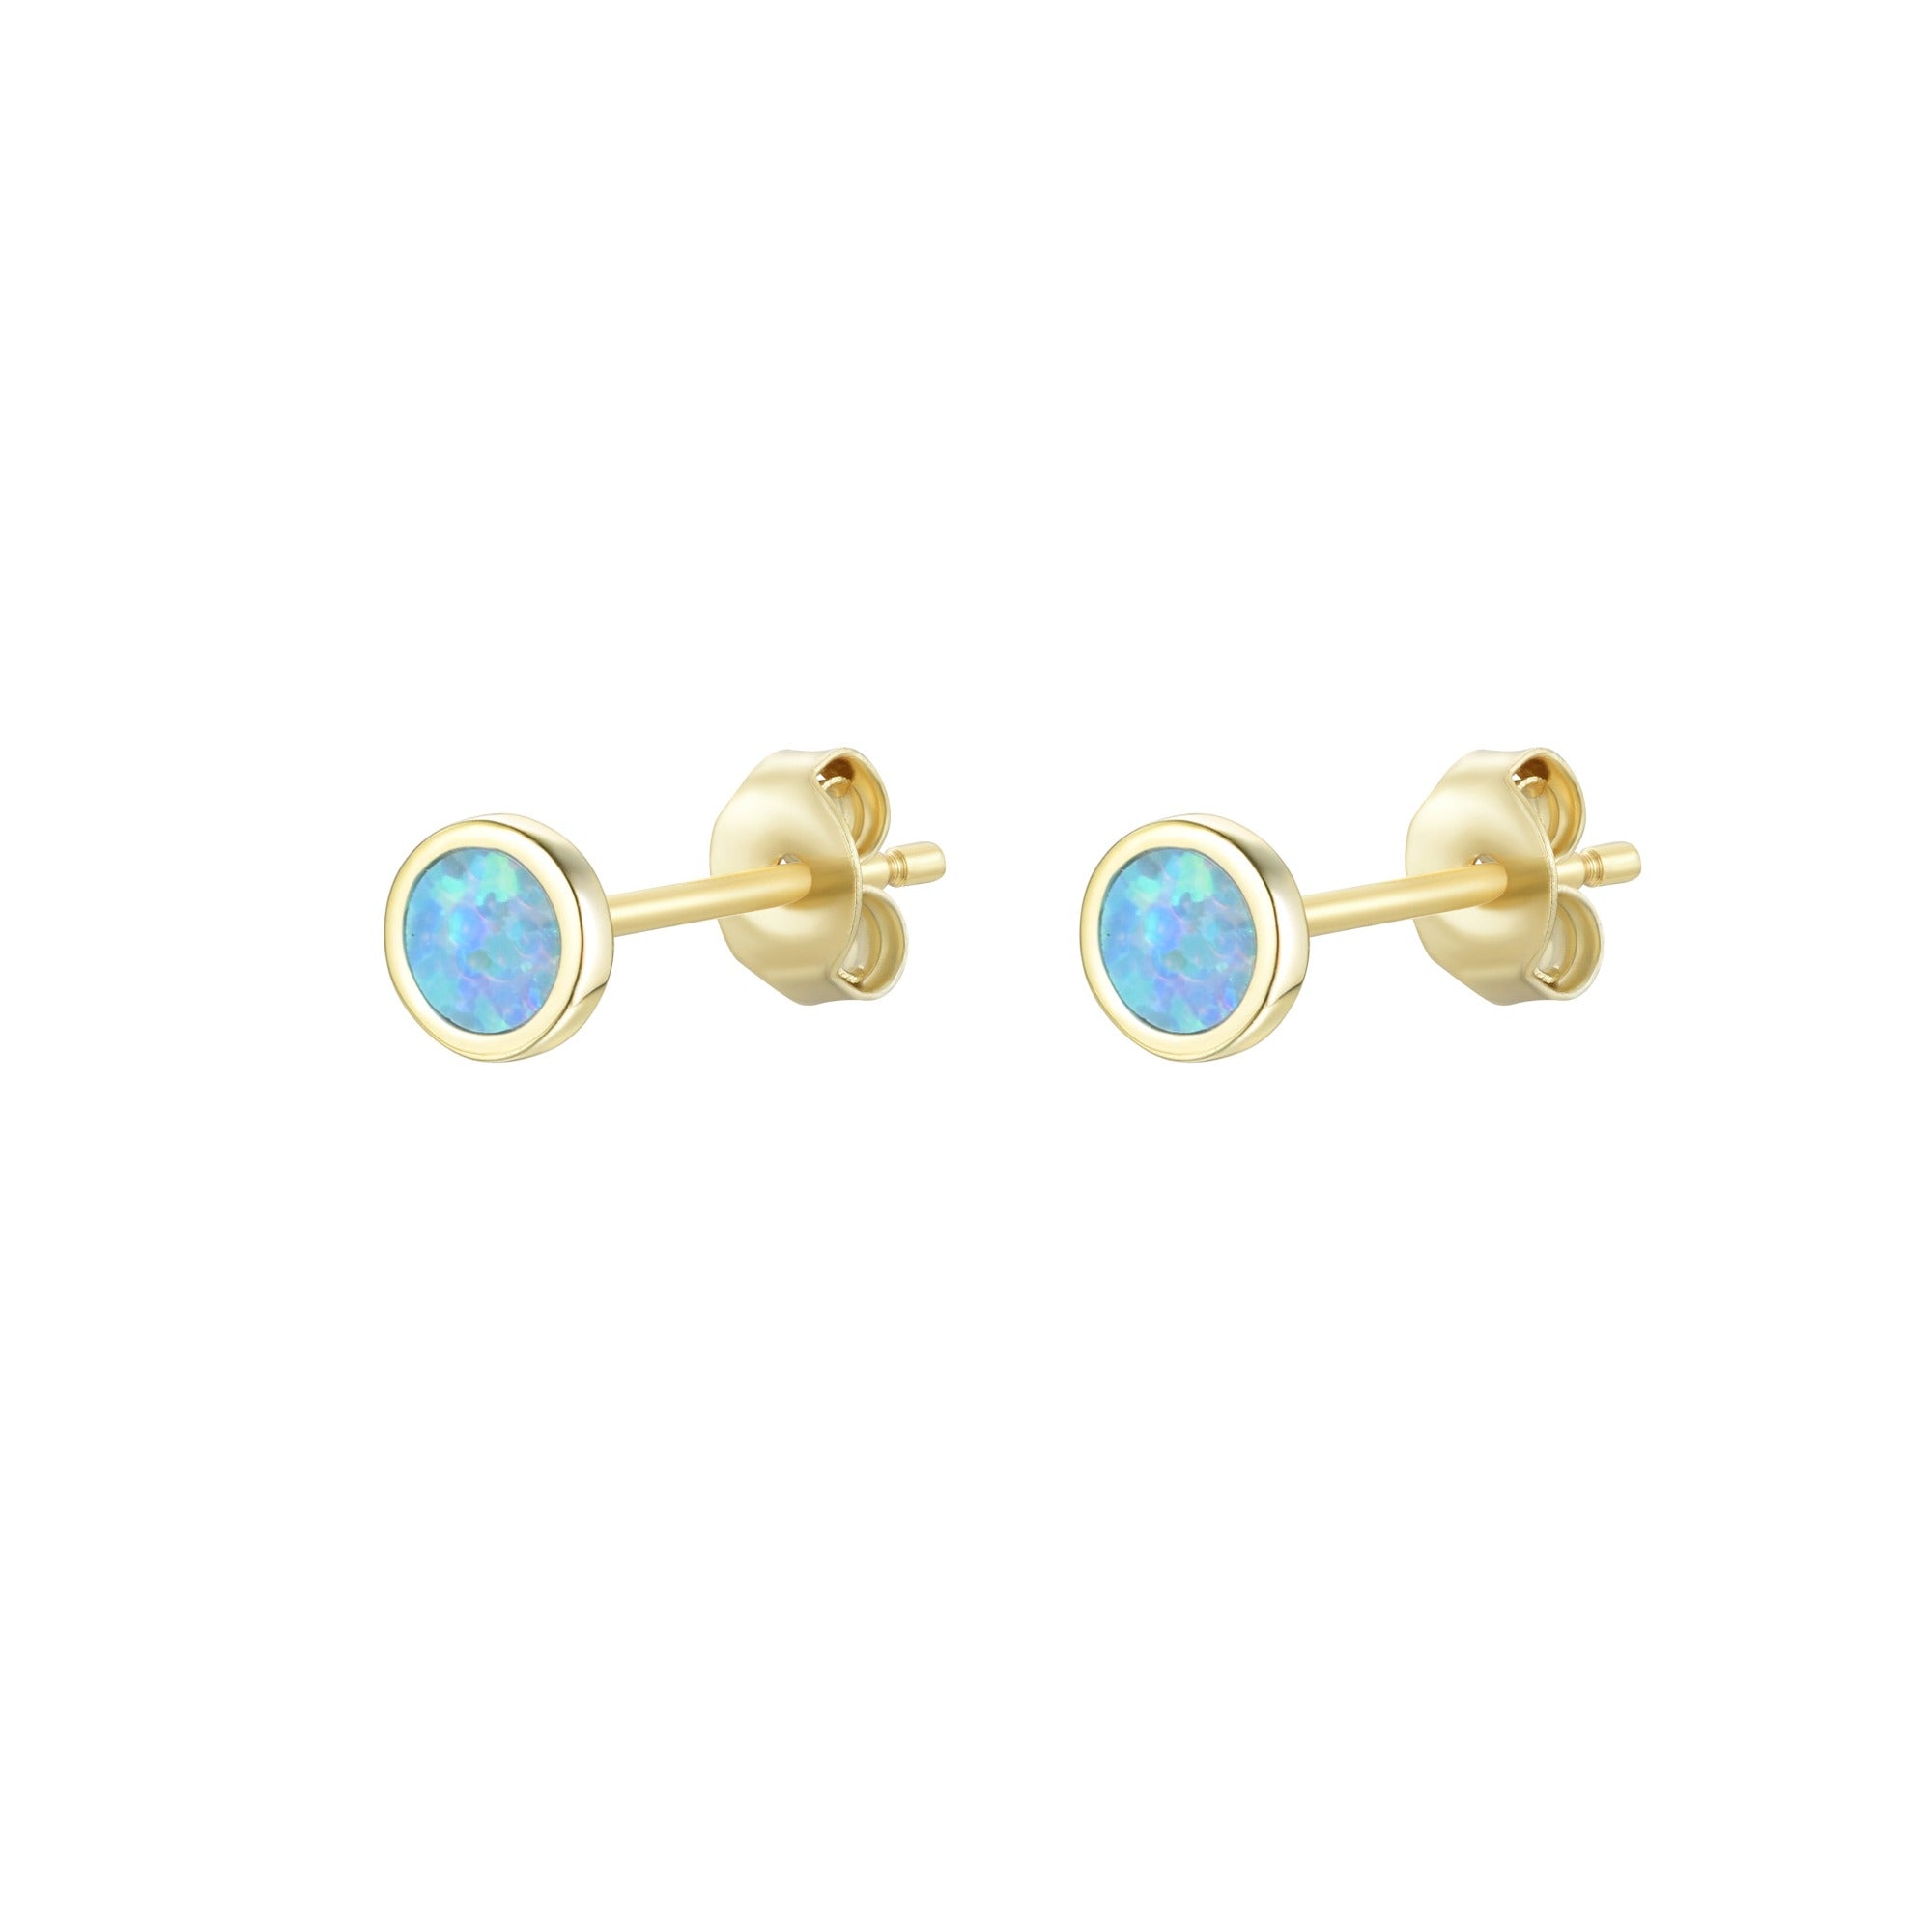 Round opal stud earrings black gold